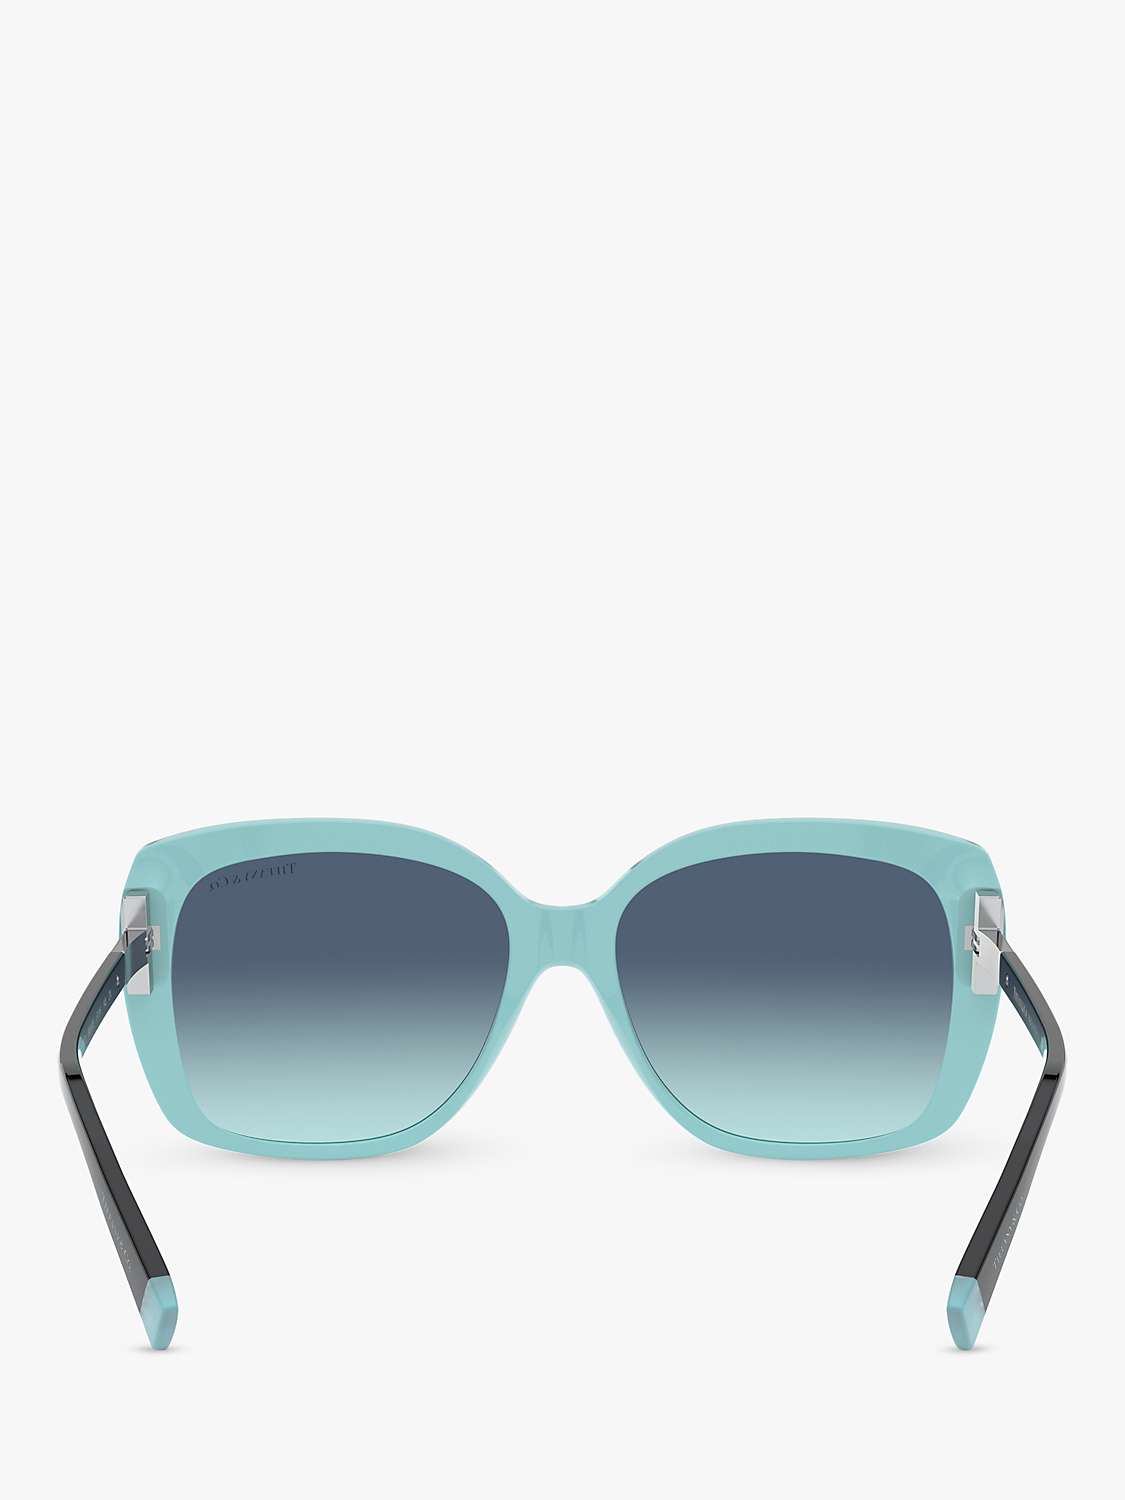 Tiffany & Co TF4171 Women's Square Sunglasses, Aqua Blue at John Lewis ...